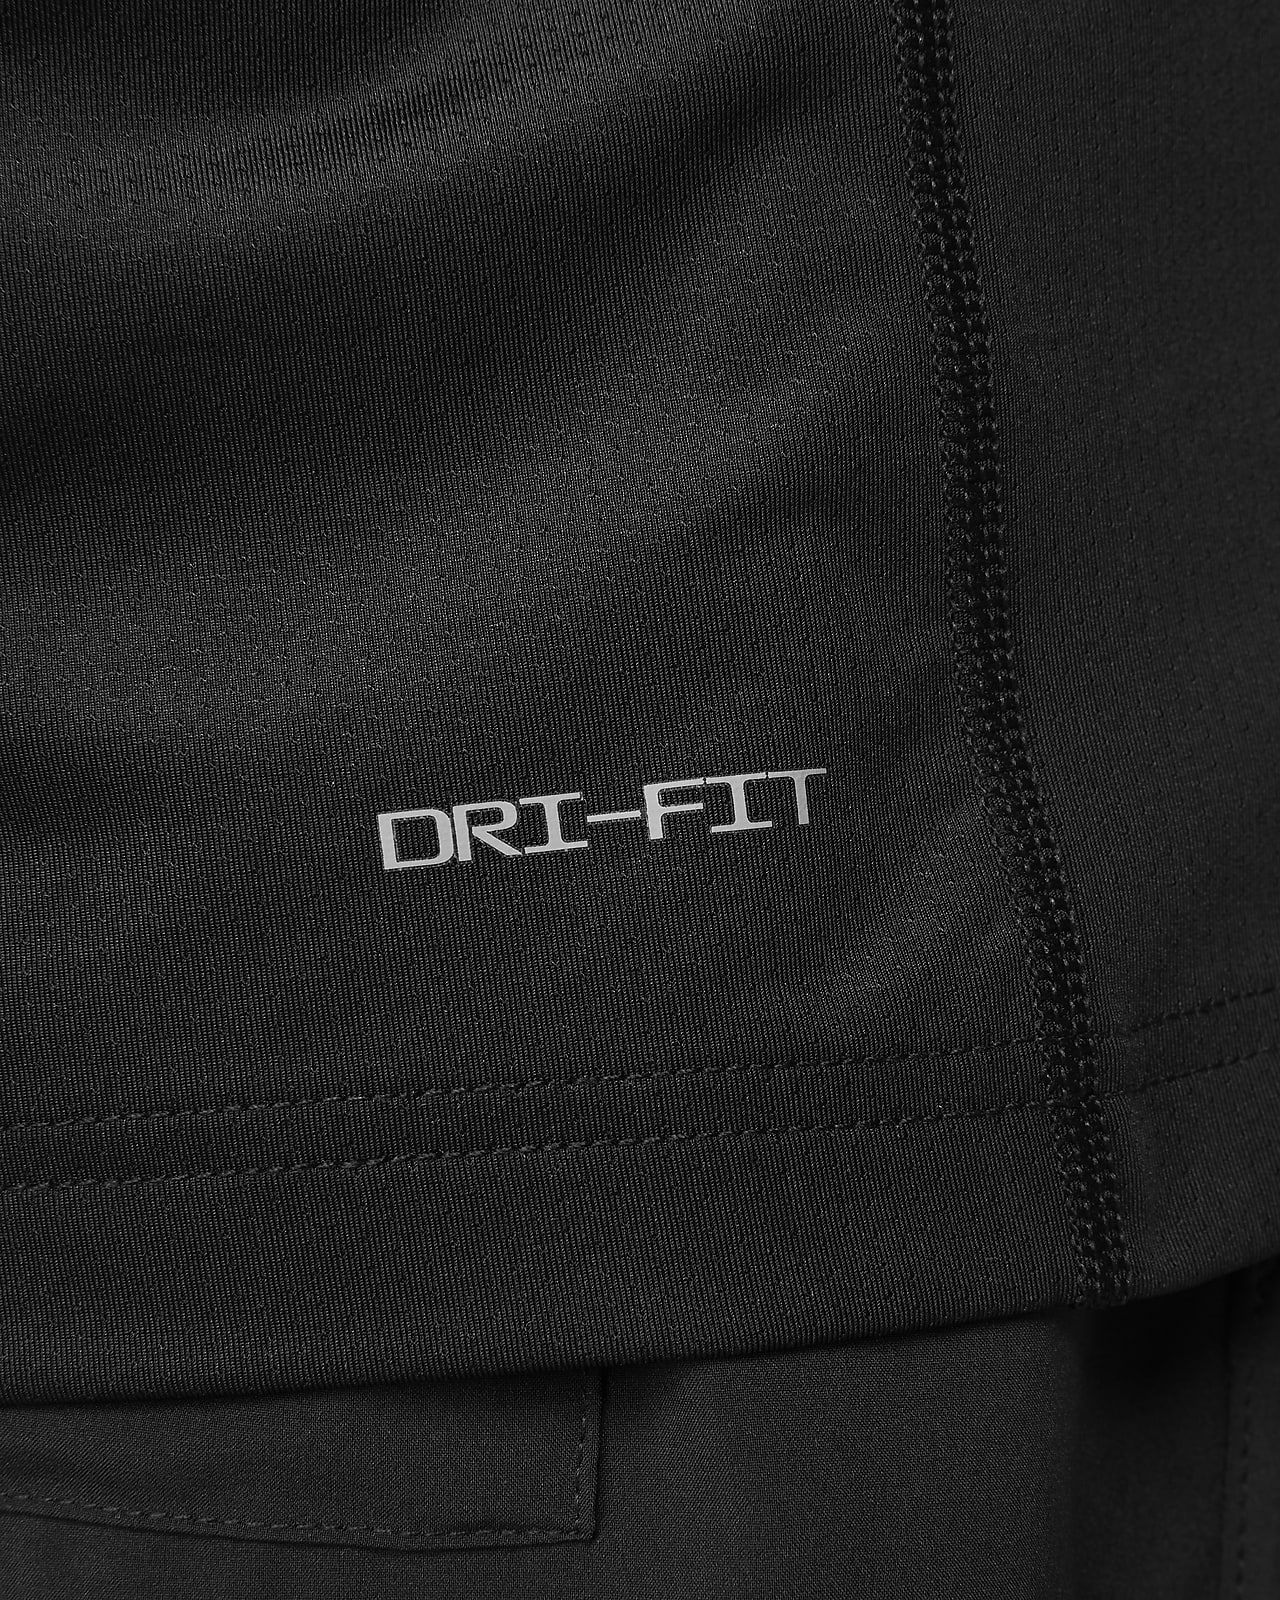 Nike Dri-FIT Ready 1/4-Zip Fitness Top - Men's 